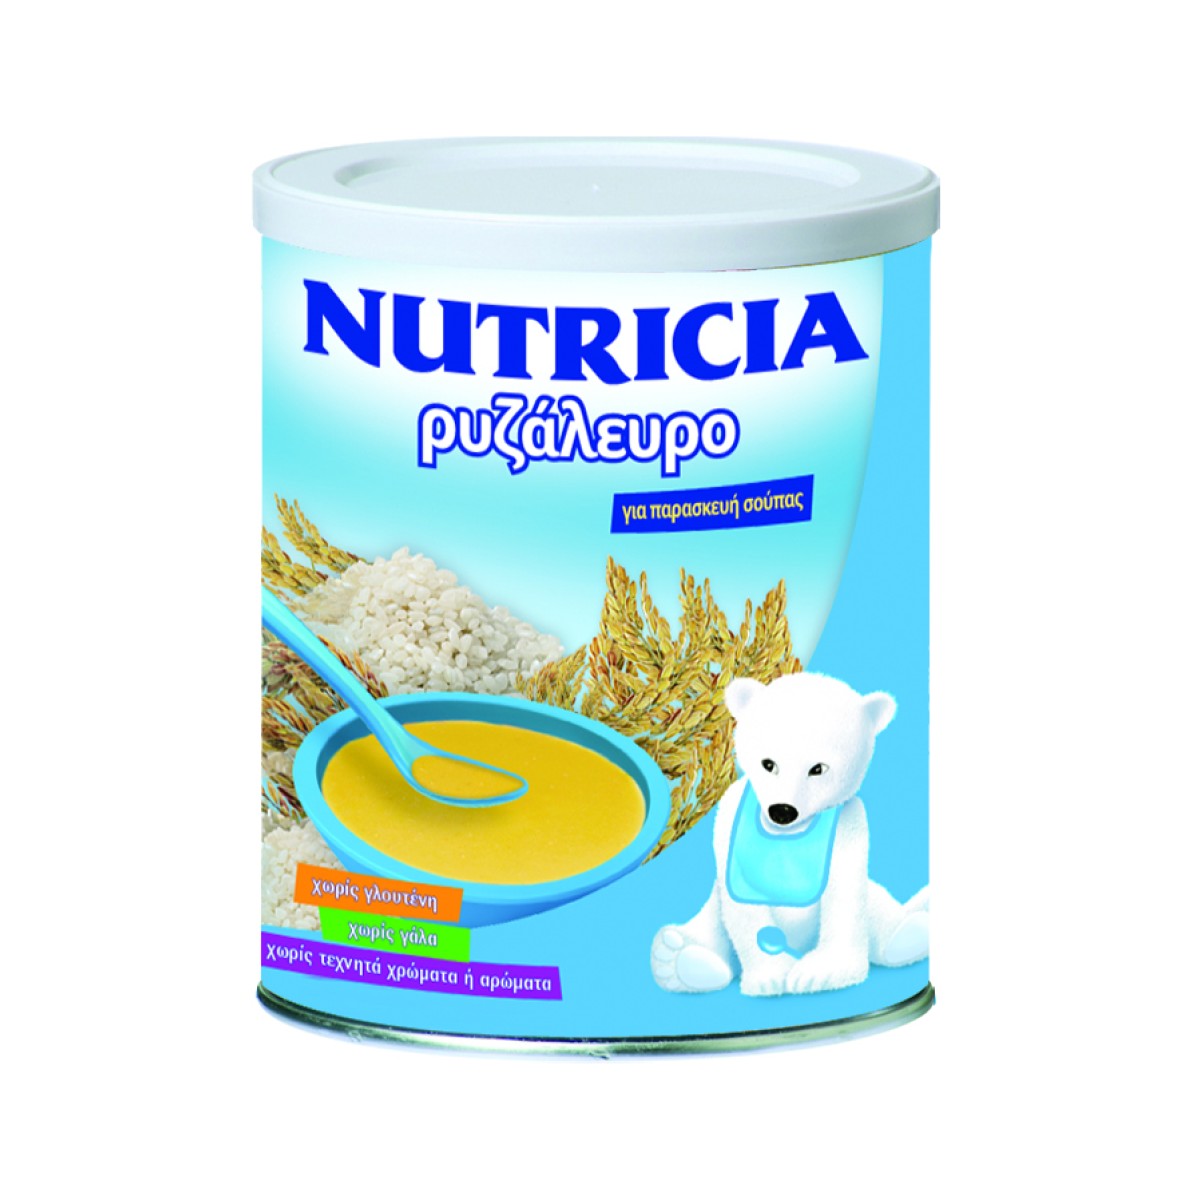 Nutricia | Ρυζάλευρο για Παρασκευή Σούπας 4 Μηνών + |250gr